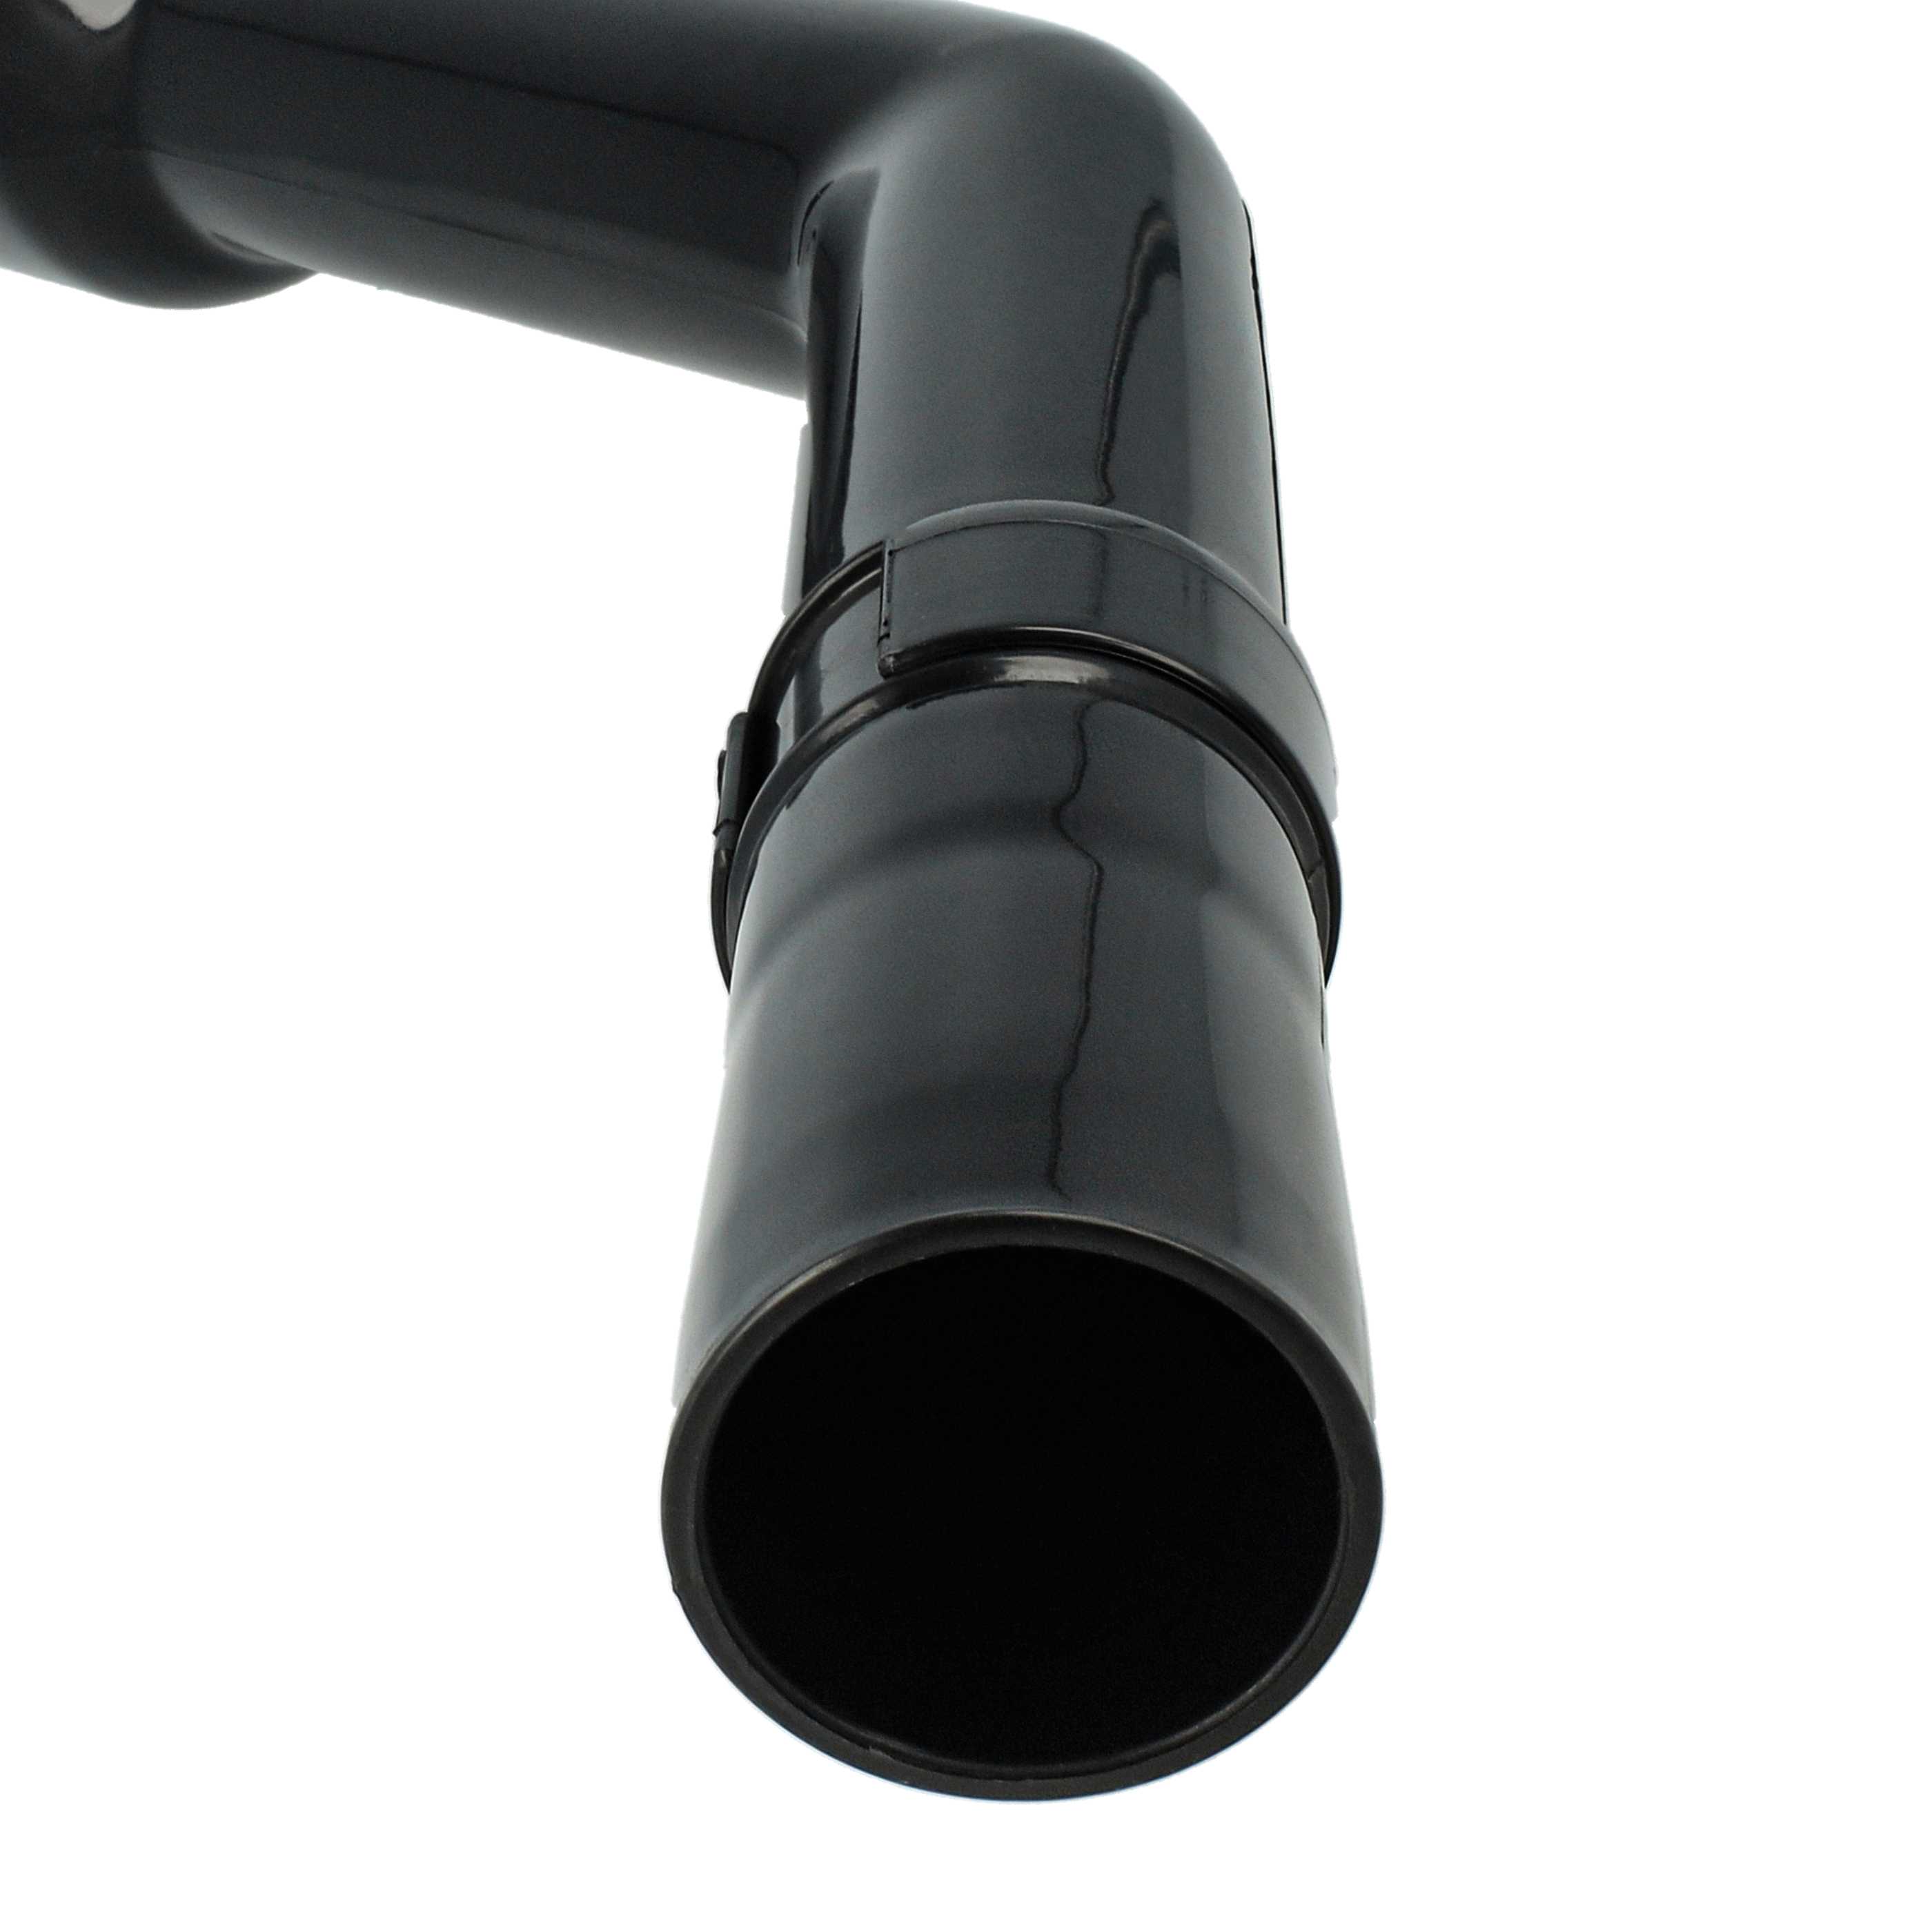 Vacuum Cleaner Handle as Replacement for Hitachi Vacuum Cleaner Handle 5100937 32 mm Diameter